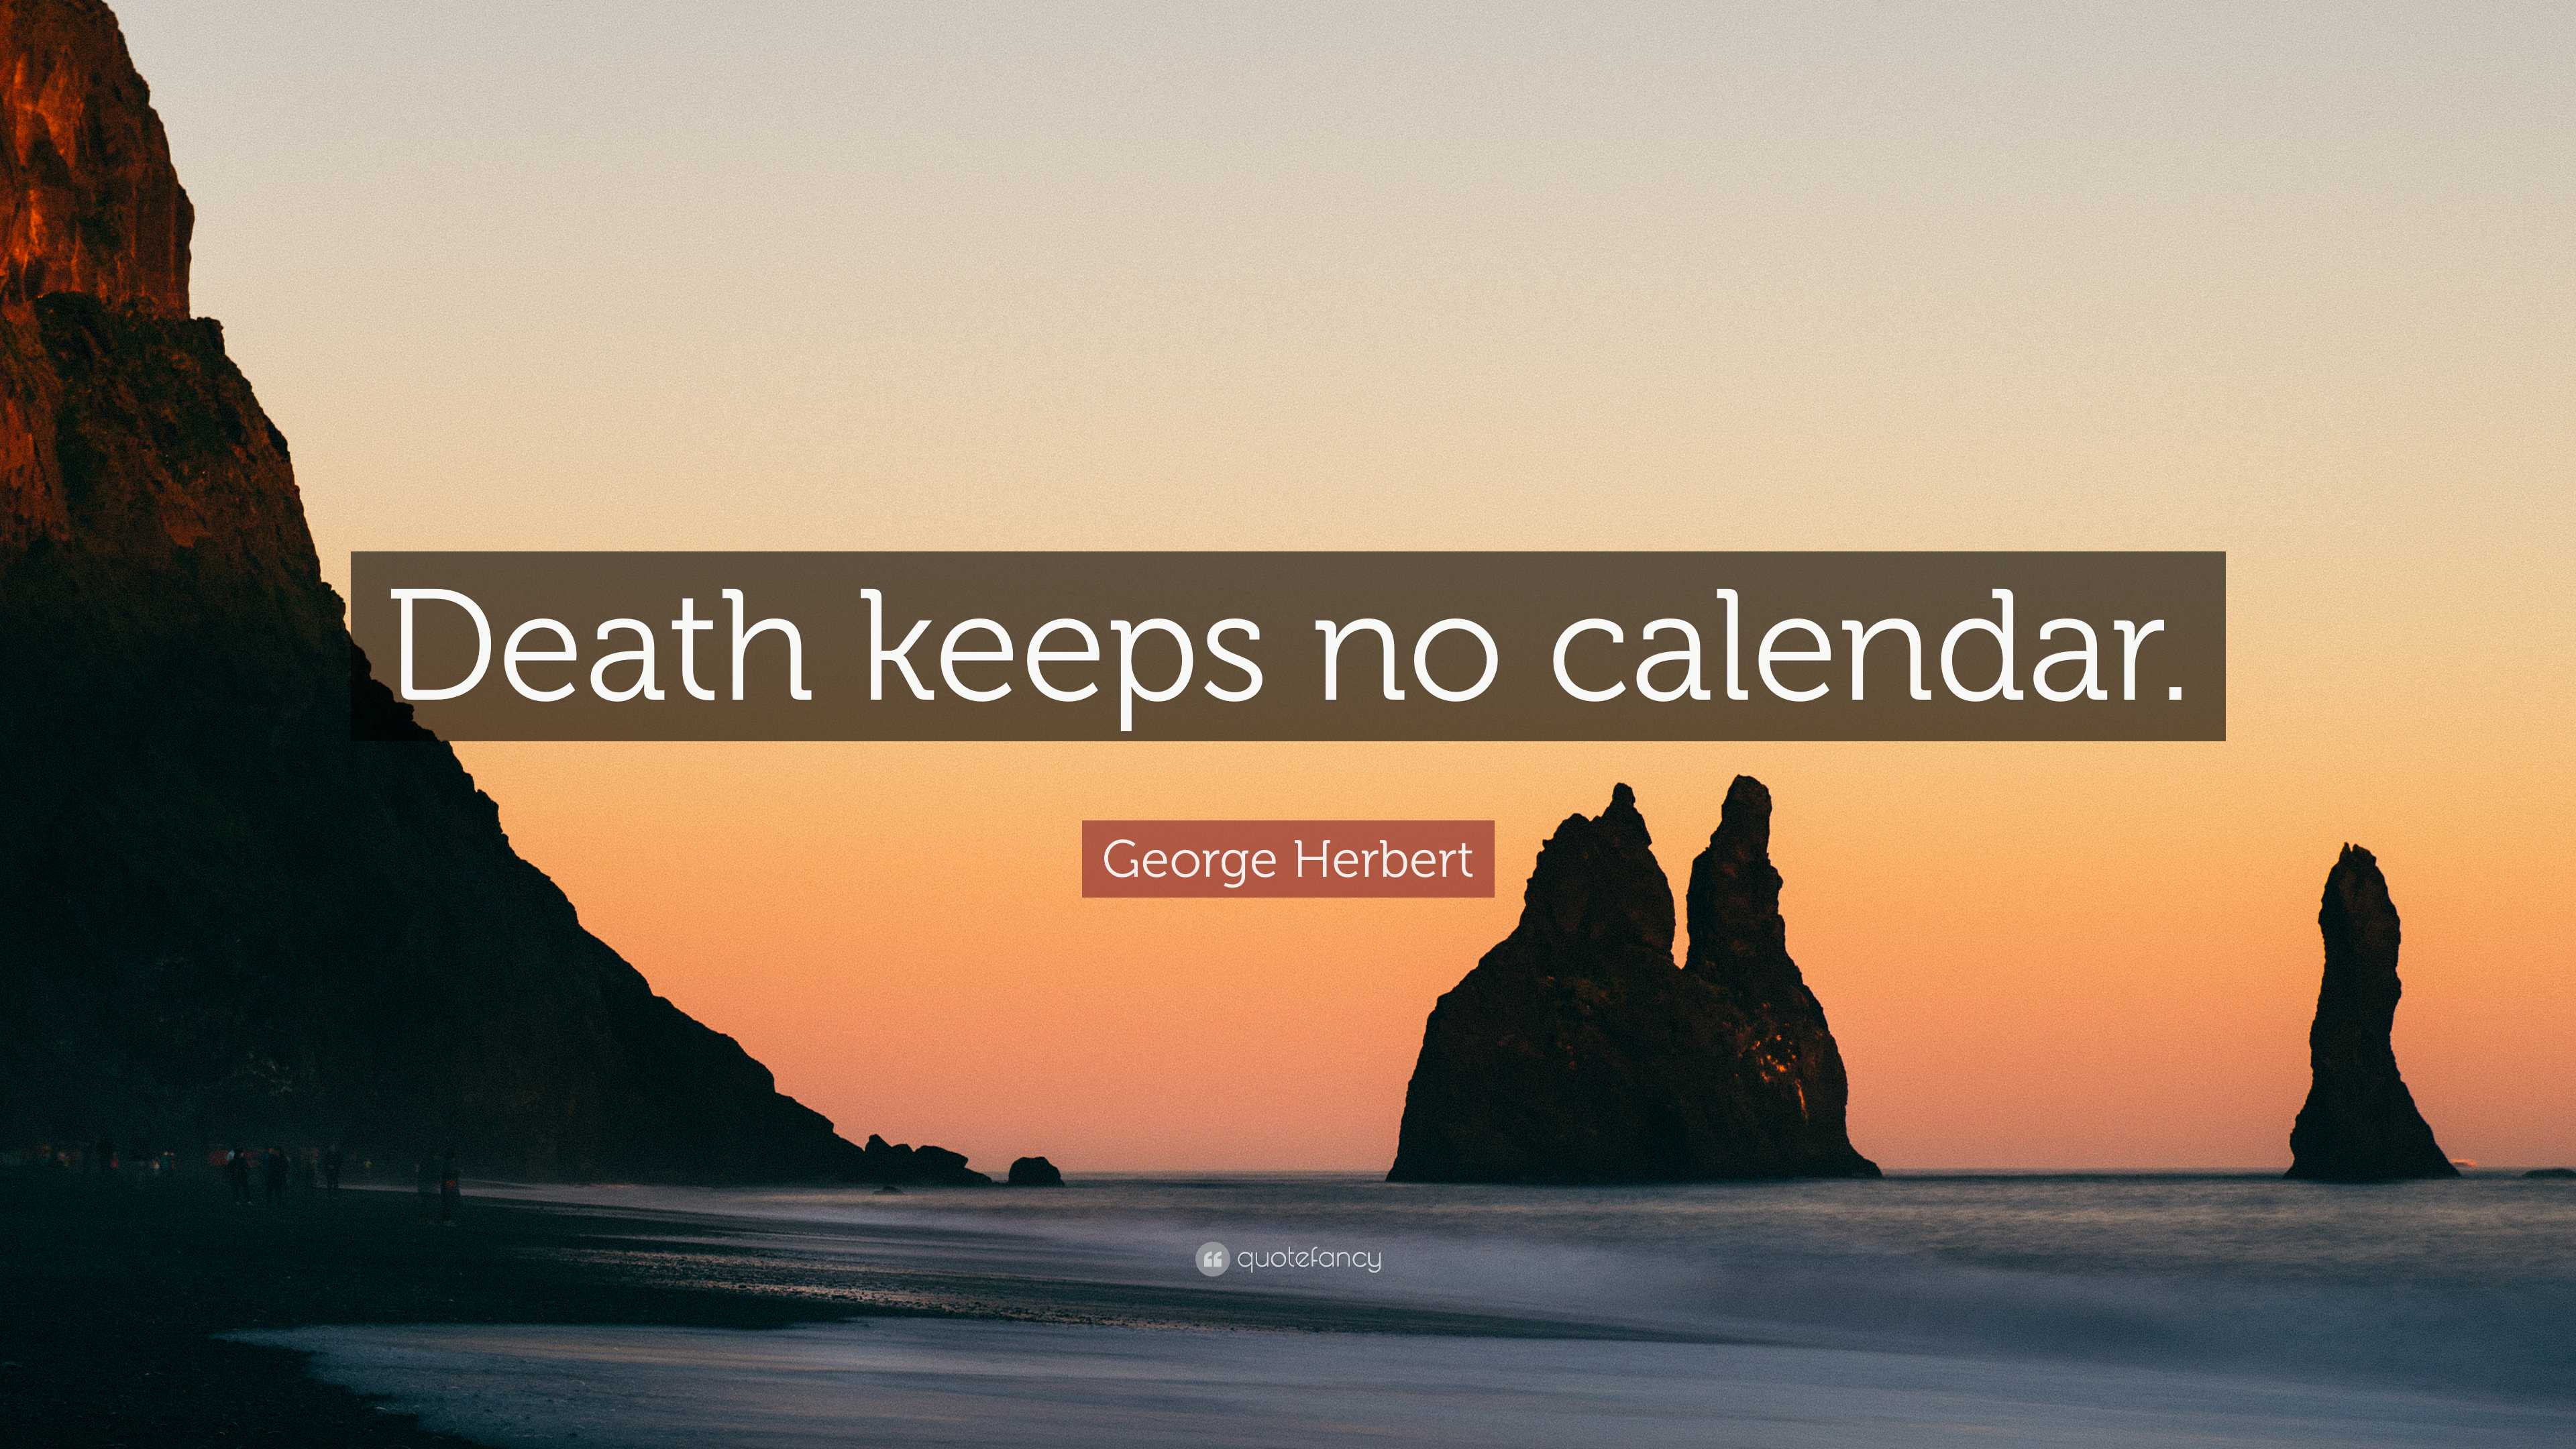 Herbert Quote “Death keeps no calendar.”